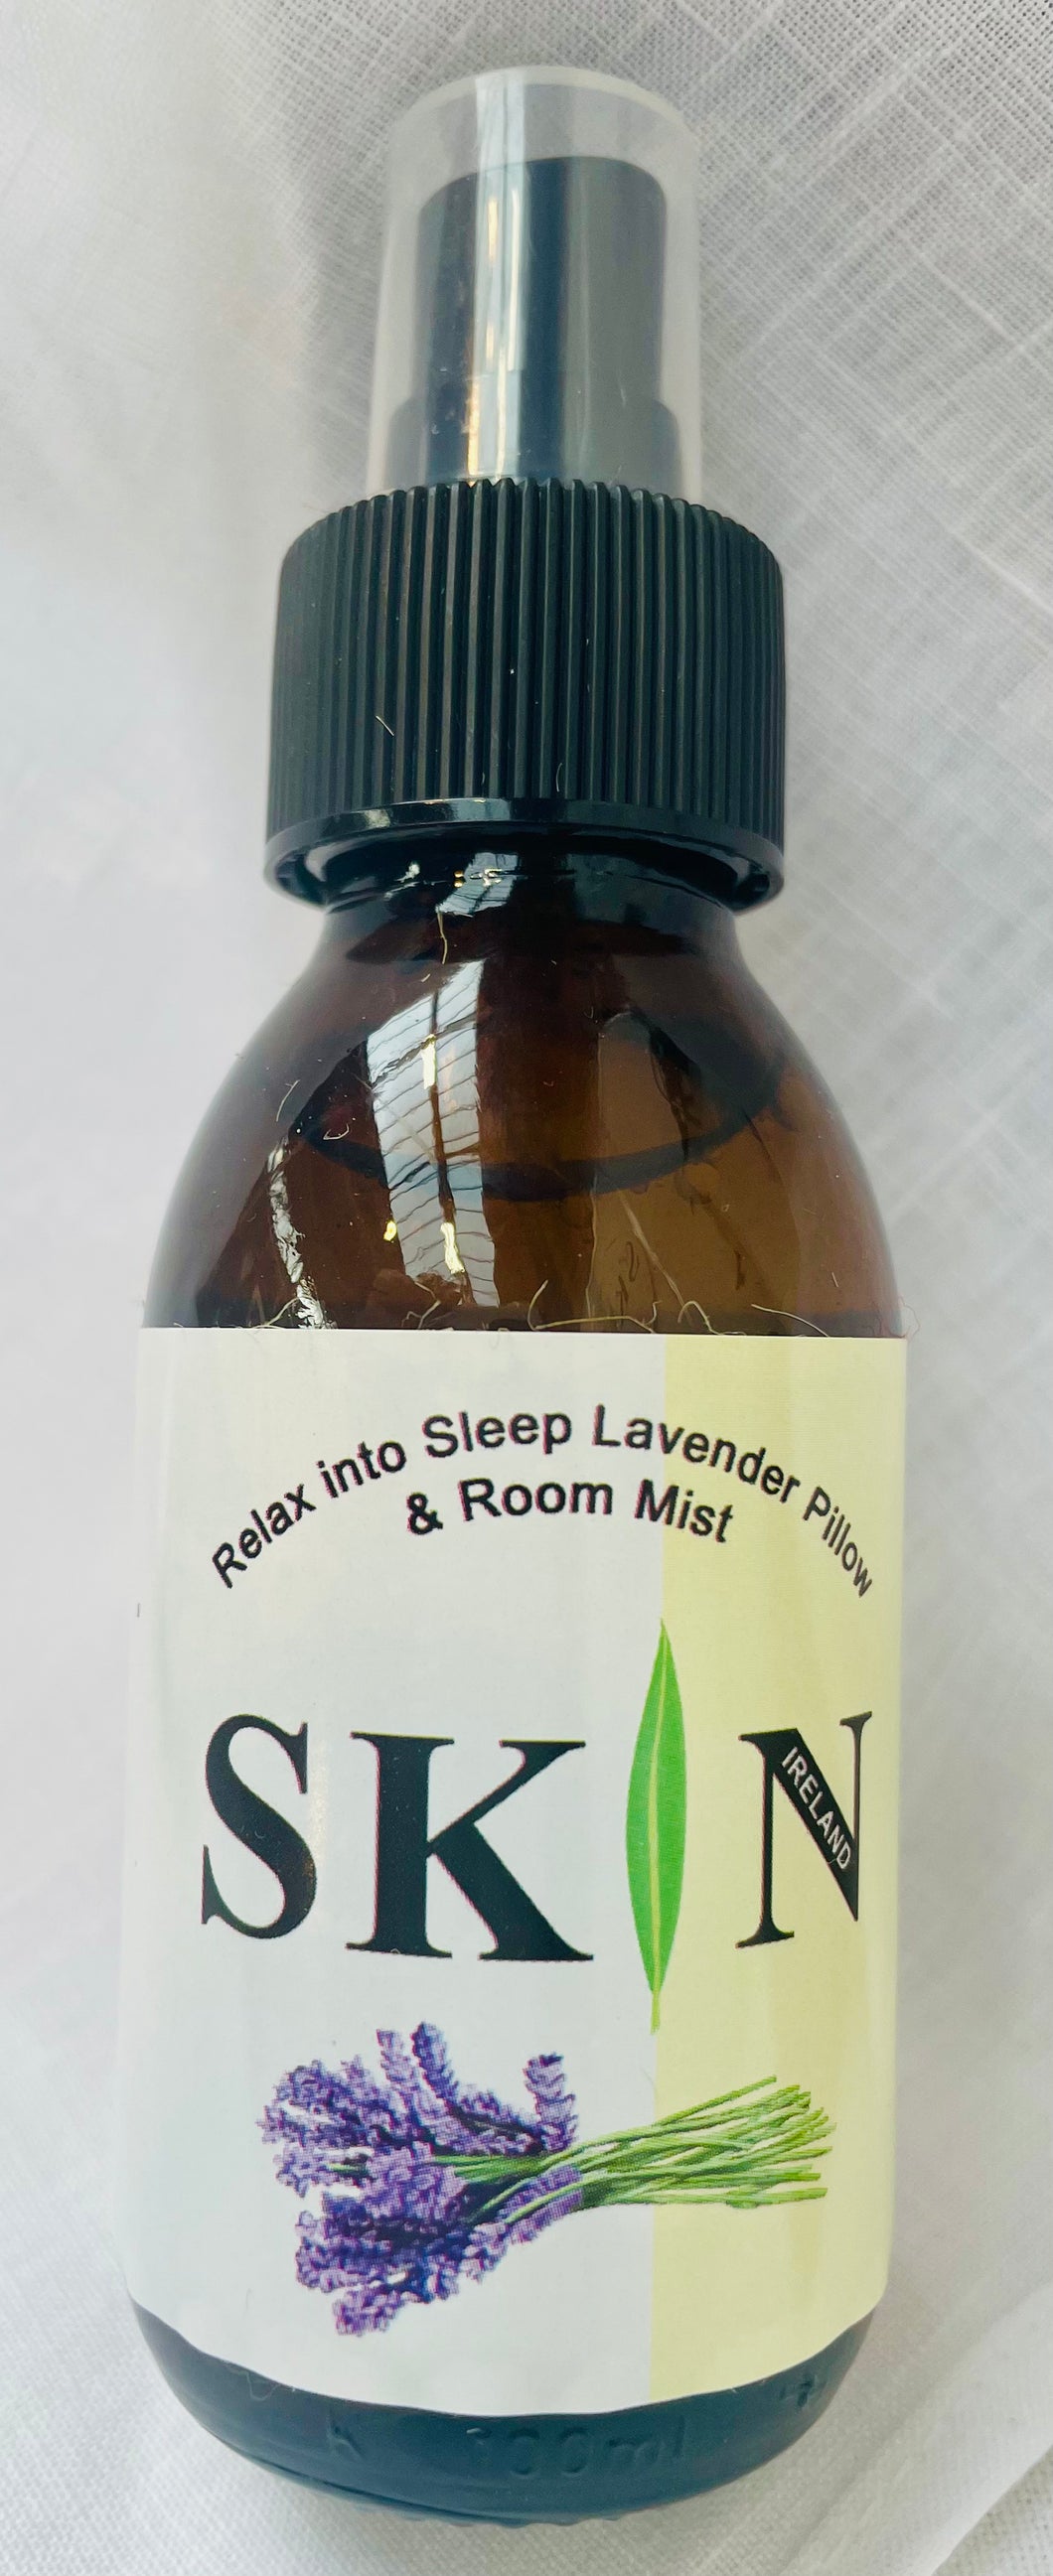 Relax into Sleep Lavender Pillow & Room Mist